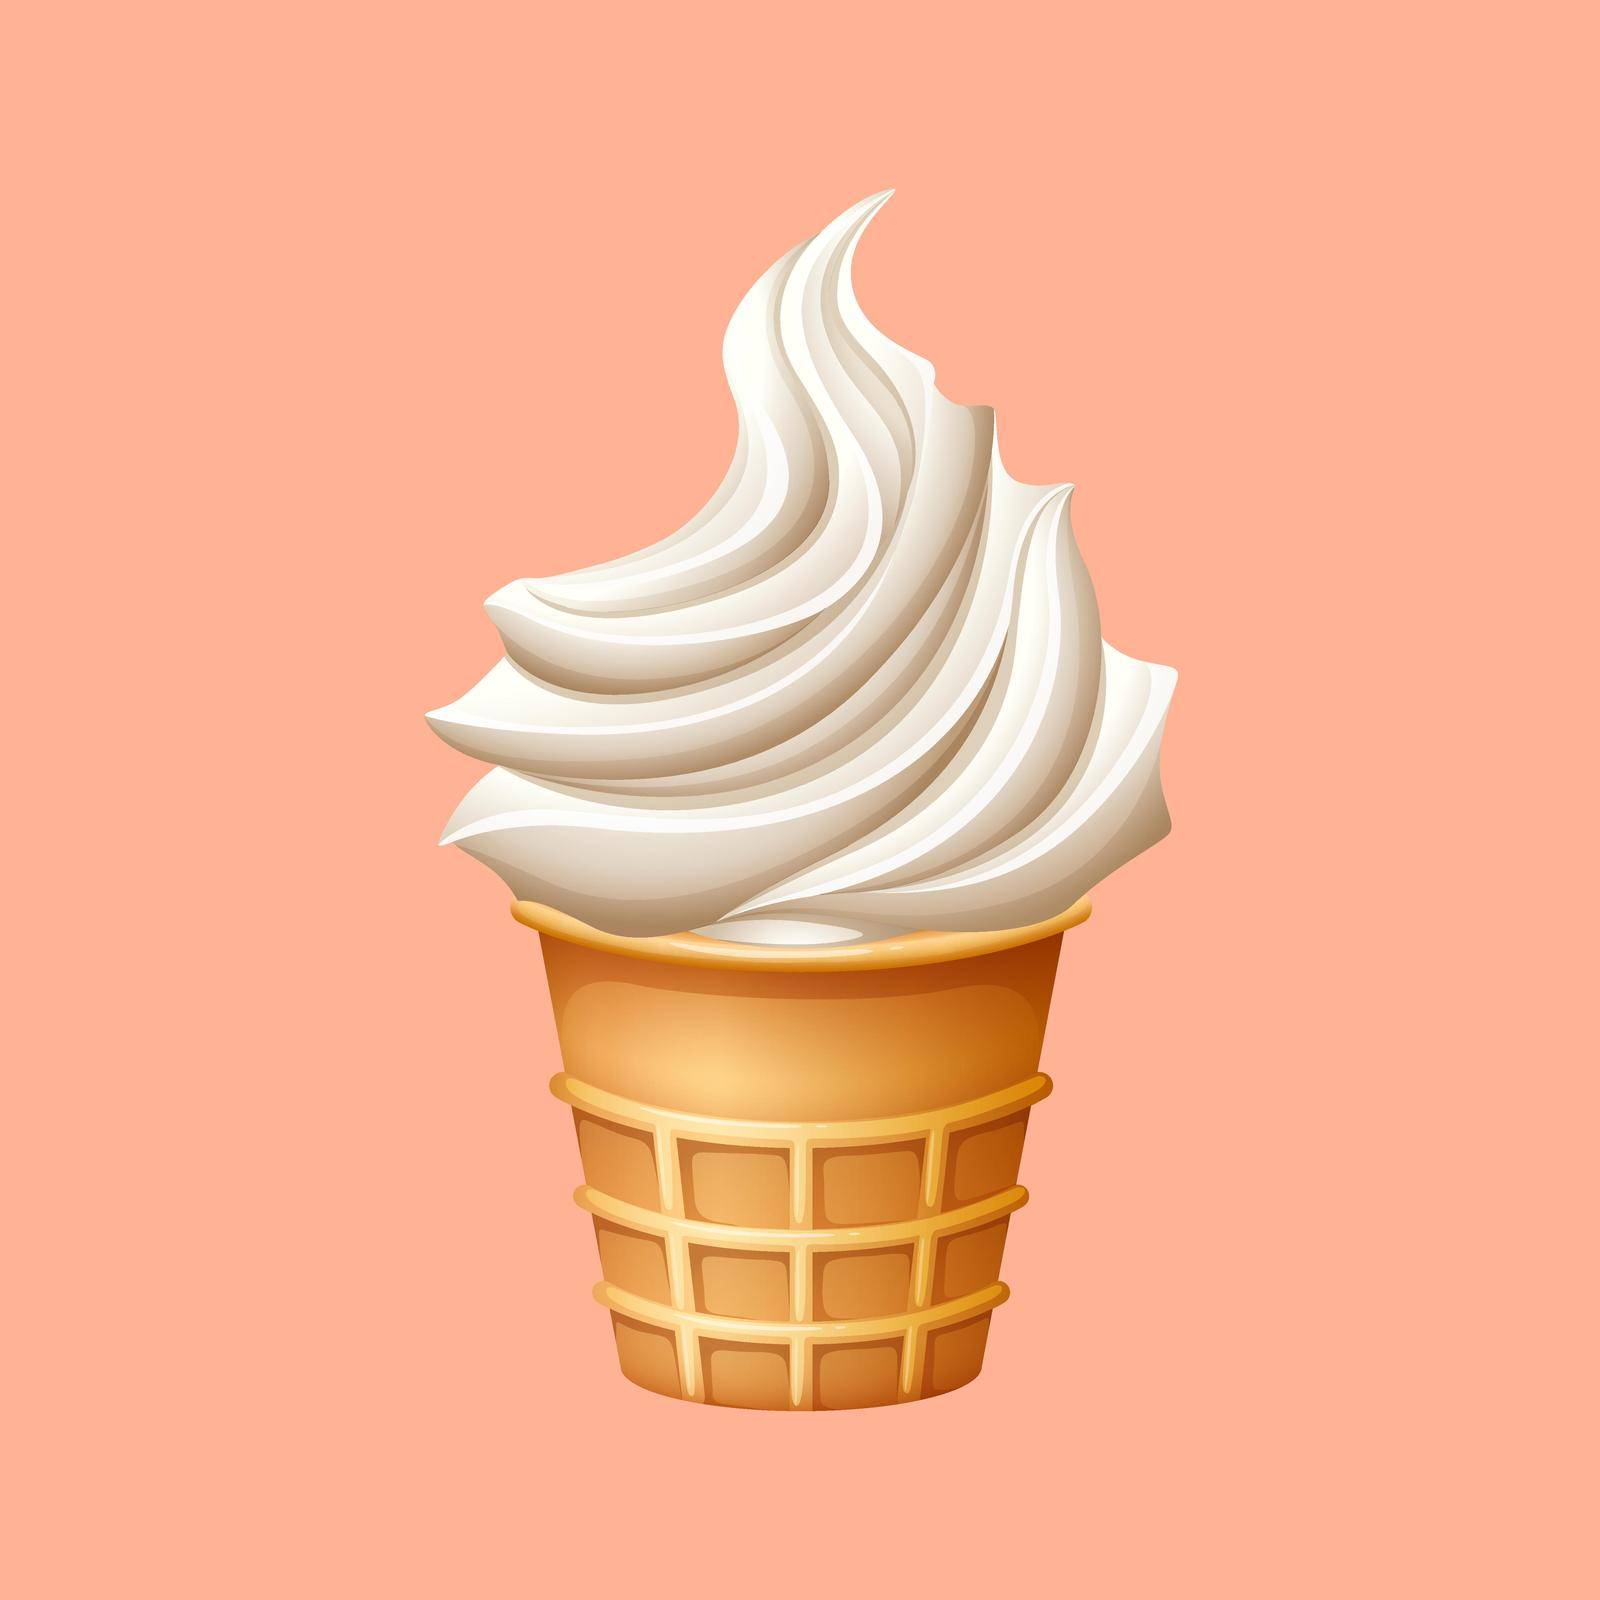 Soft ice cream in cone illustration